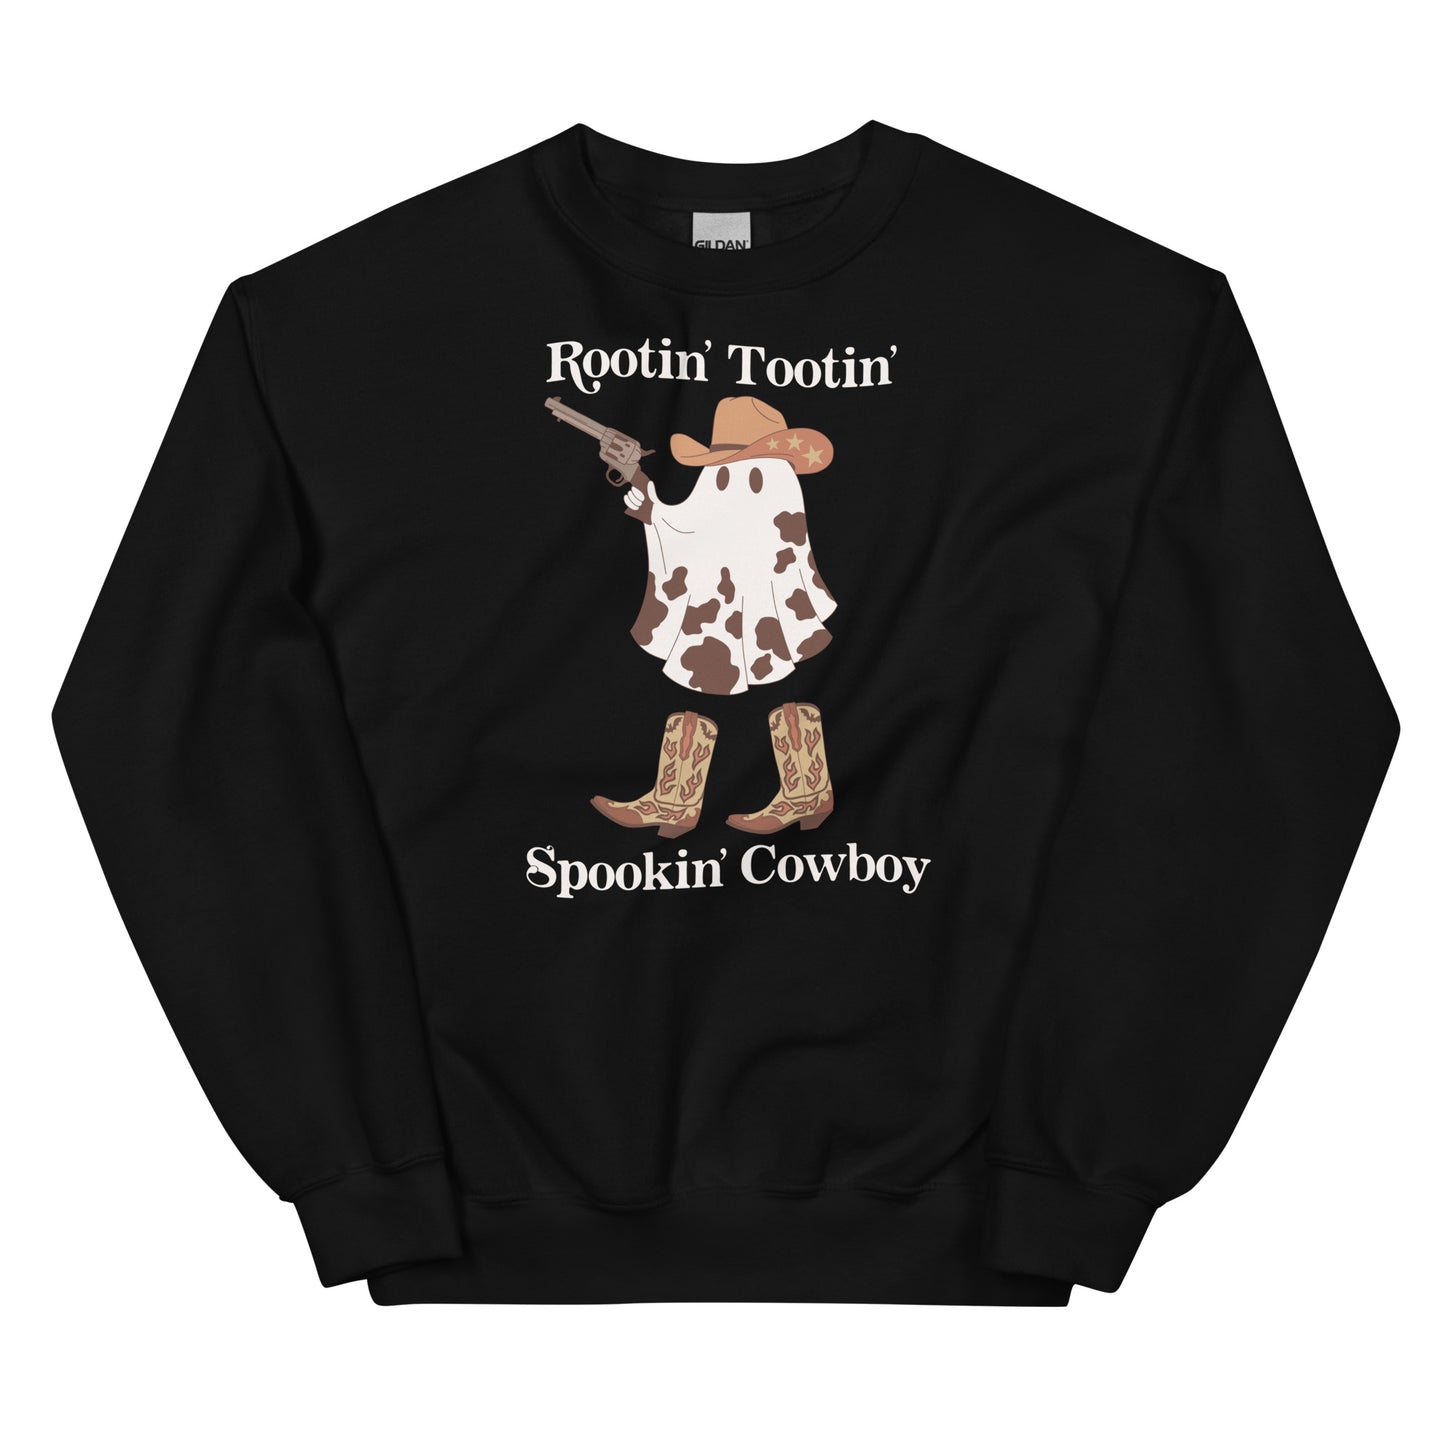 Rootin' Tootin' Spookin' Cowboy Unisex Sweatshirt